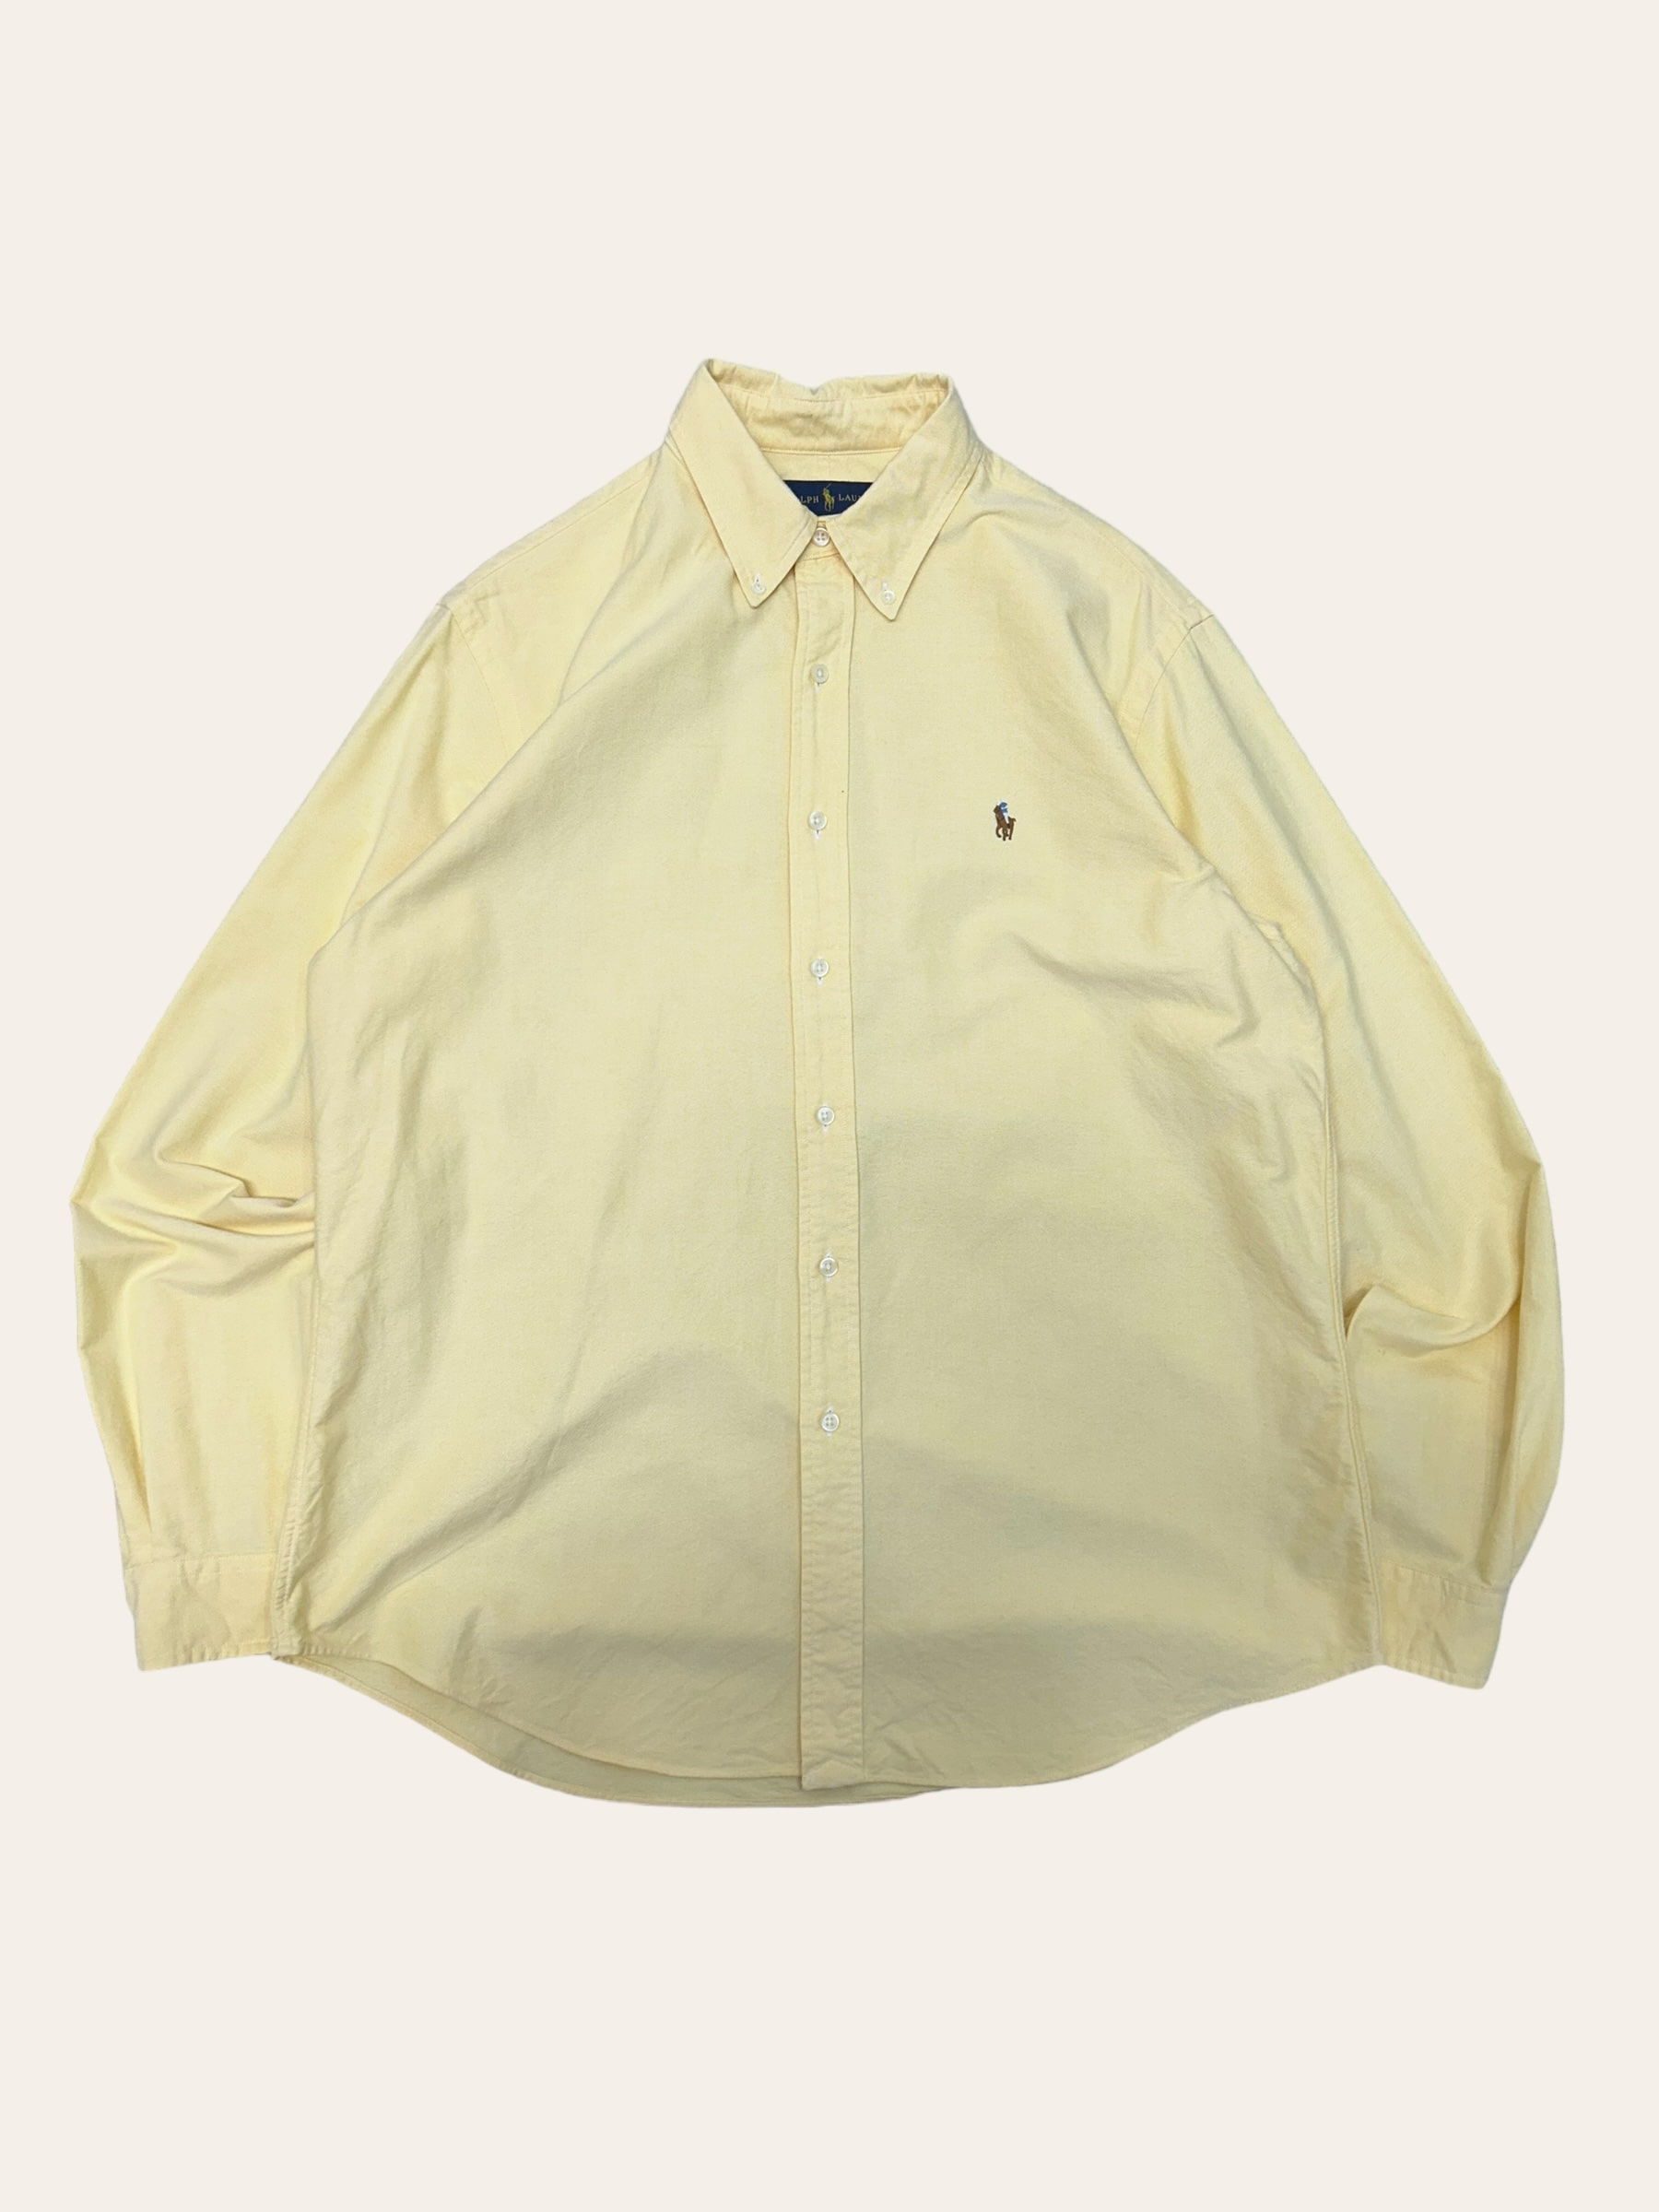 (From USA)Polo ralph lauren yellow oxford shirt L